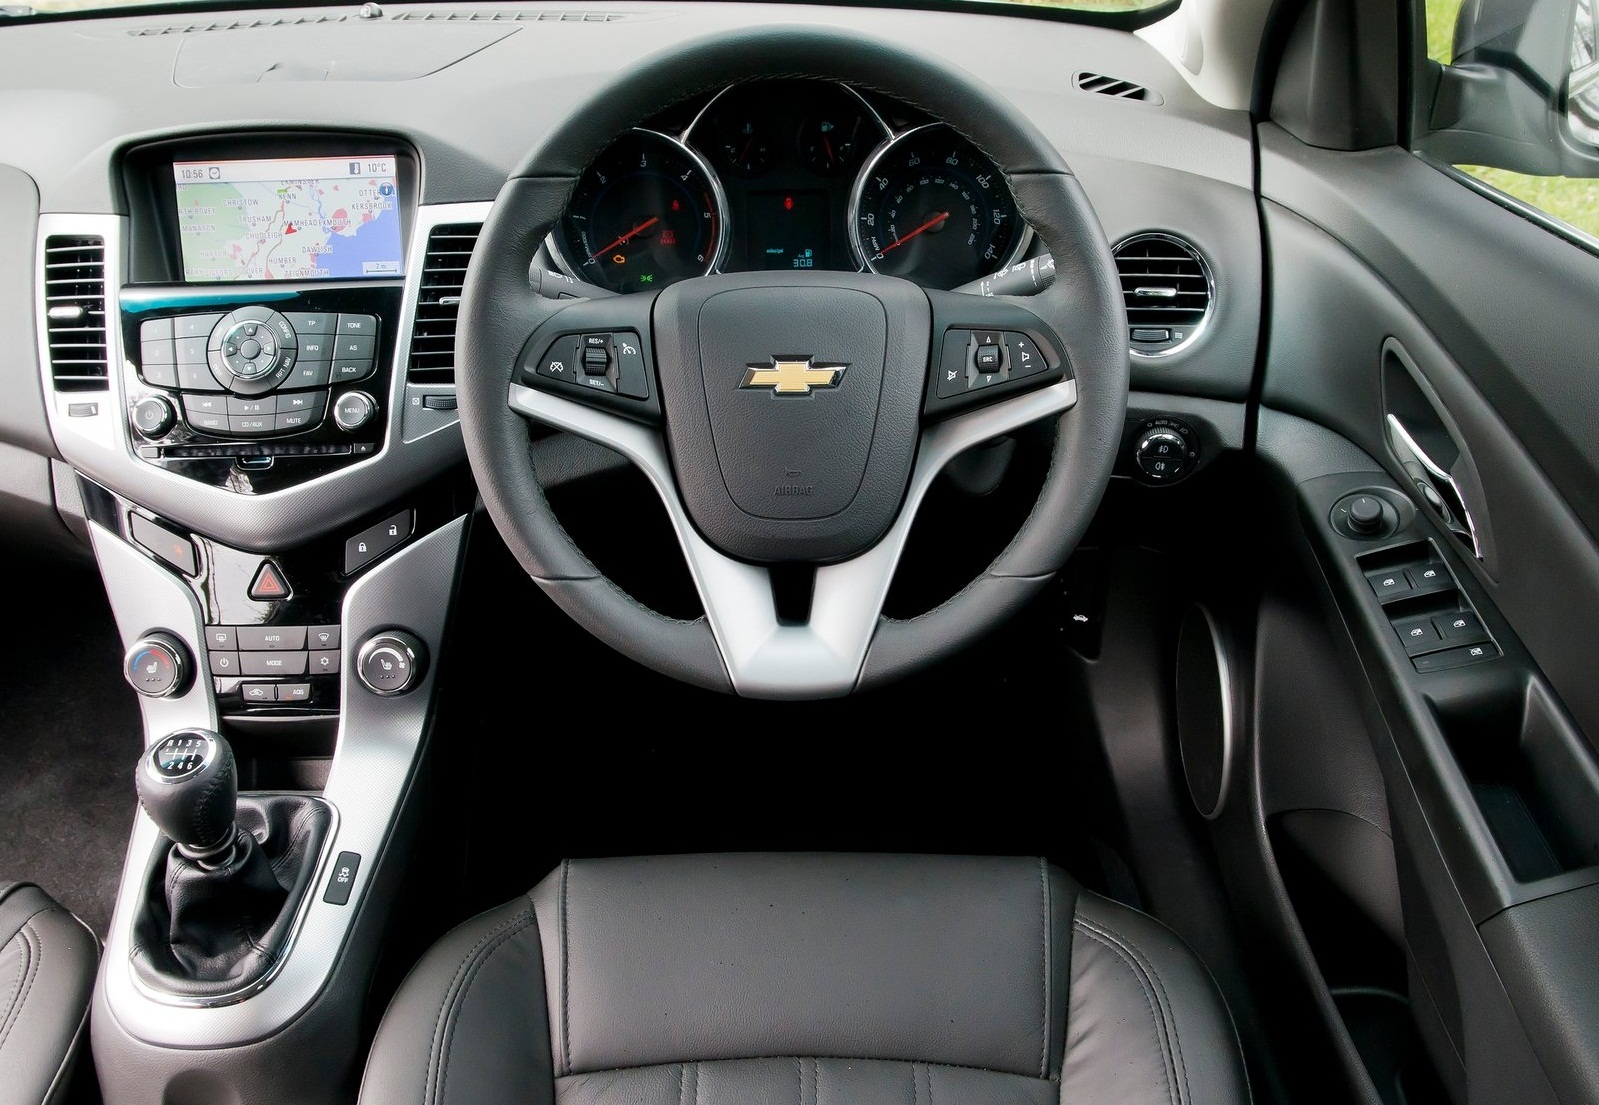 Đánh giá xe Chevrolet Cruze 2012